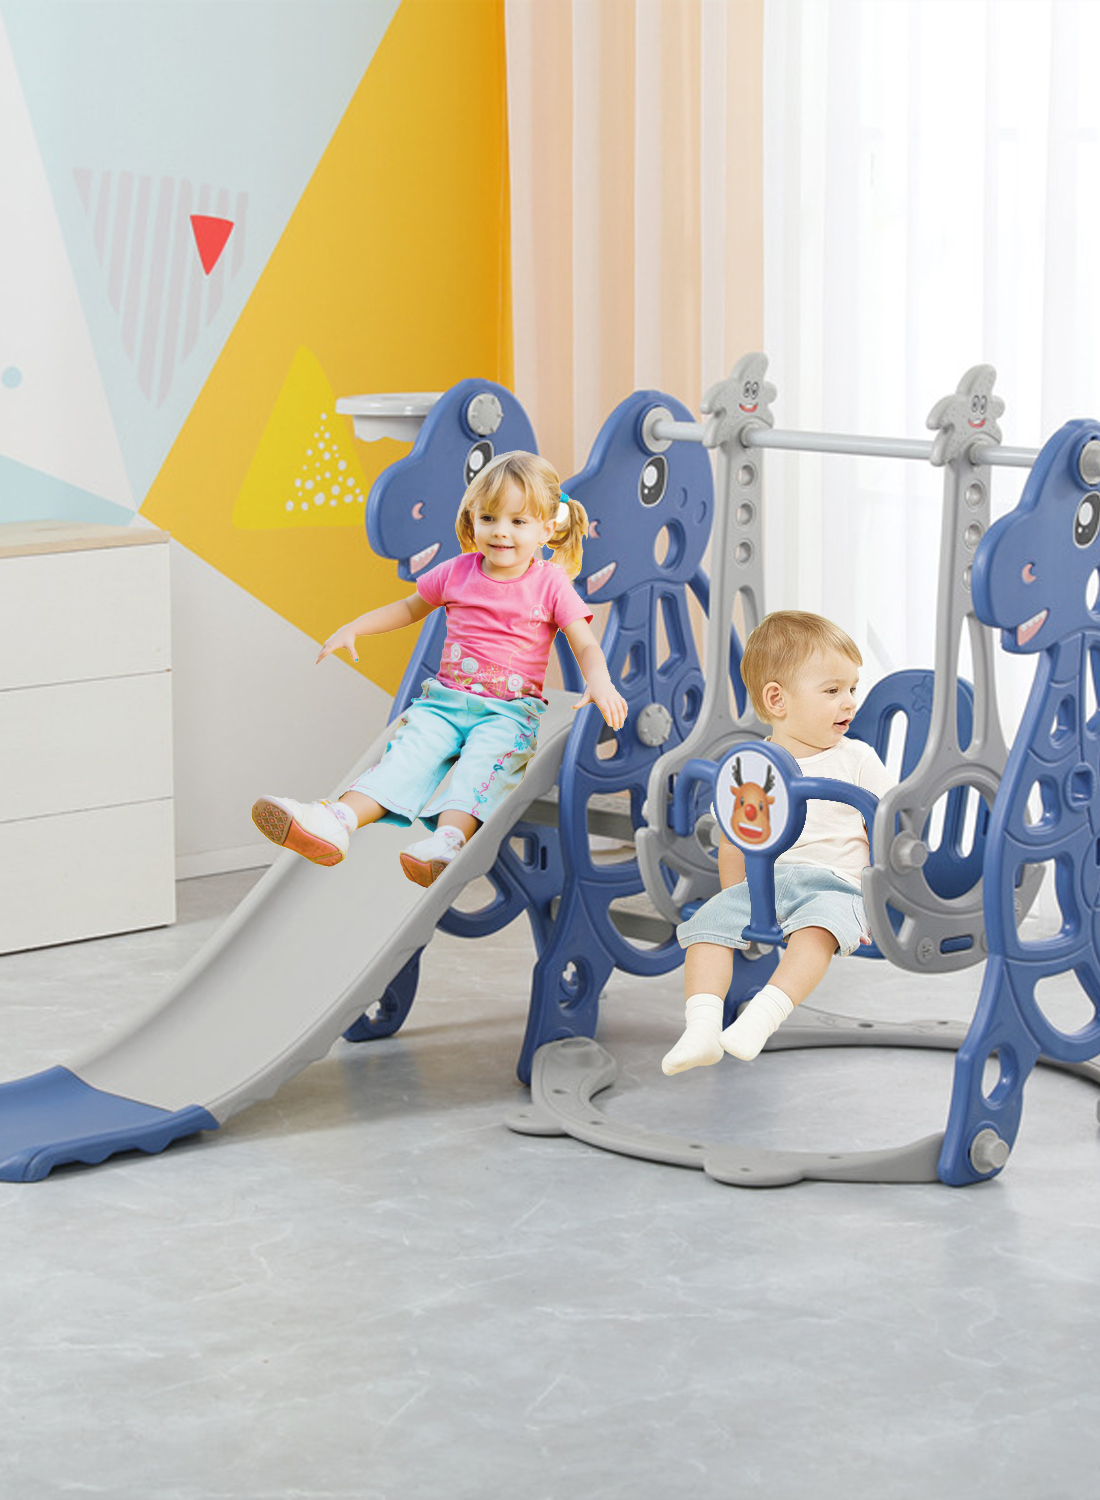 4 in 1 Toddler Slide Swing Set, Indoor Baby Slide, Includes Slide, Swing, Basketball Hoop, and Climber, Freestanding Slide Climber Playset Toy